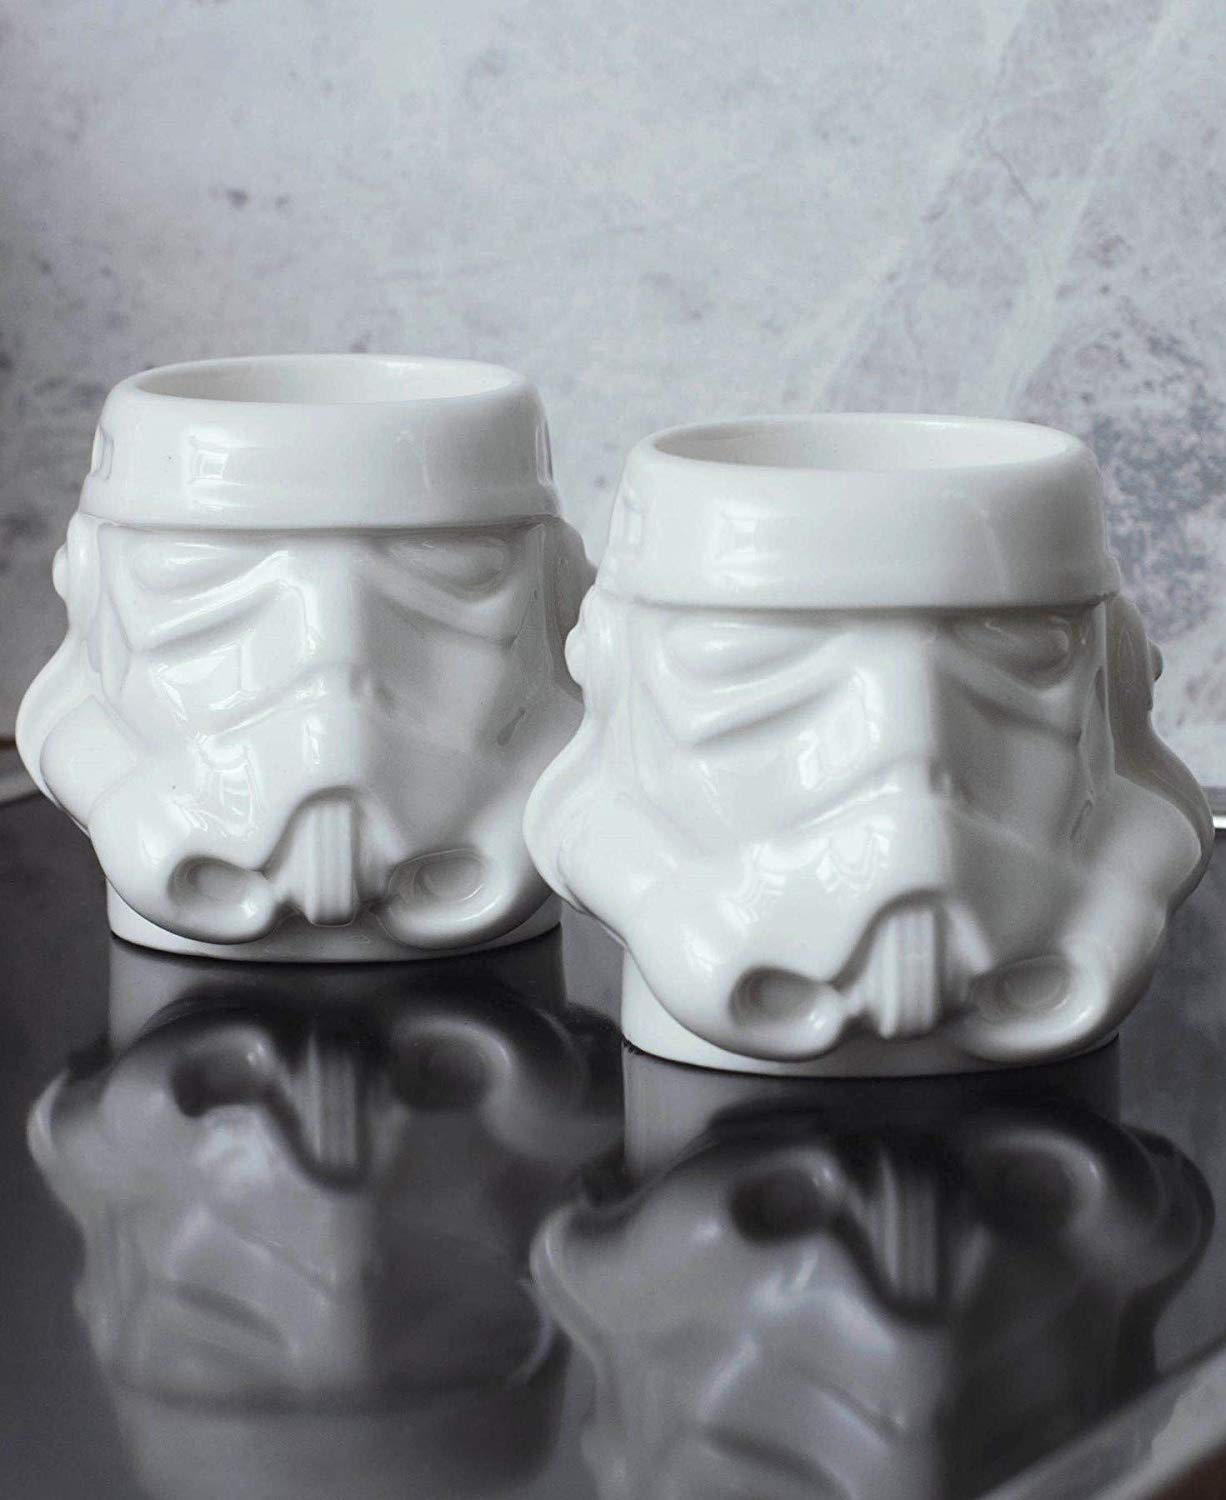 Stormtrooper Espresso Mugs